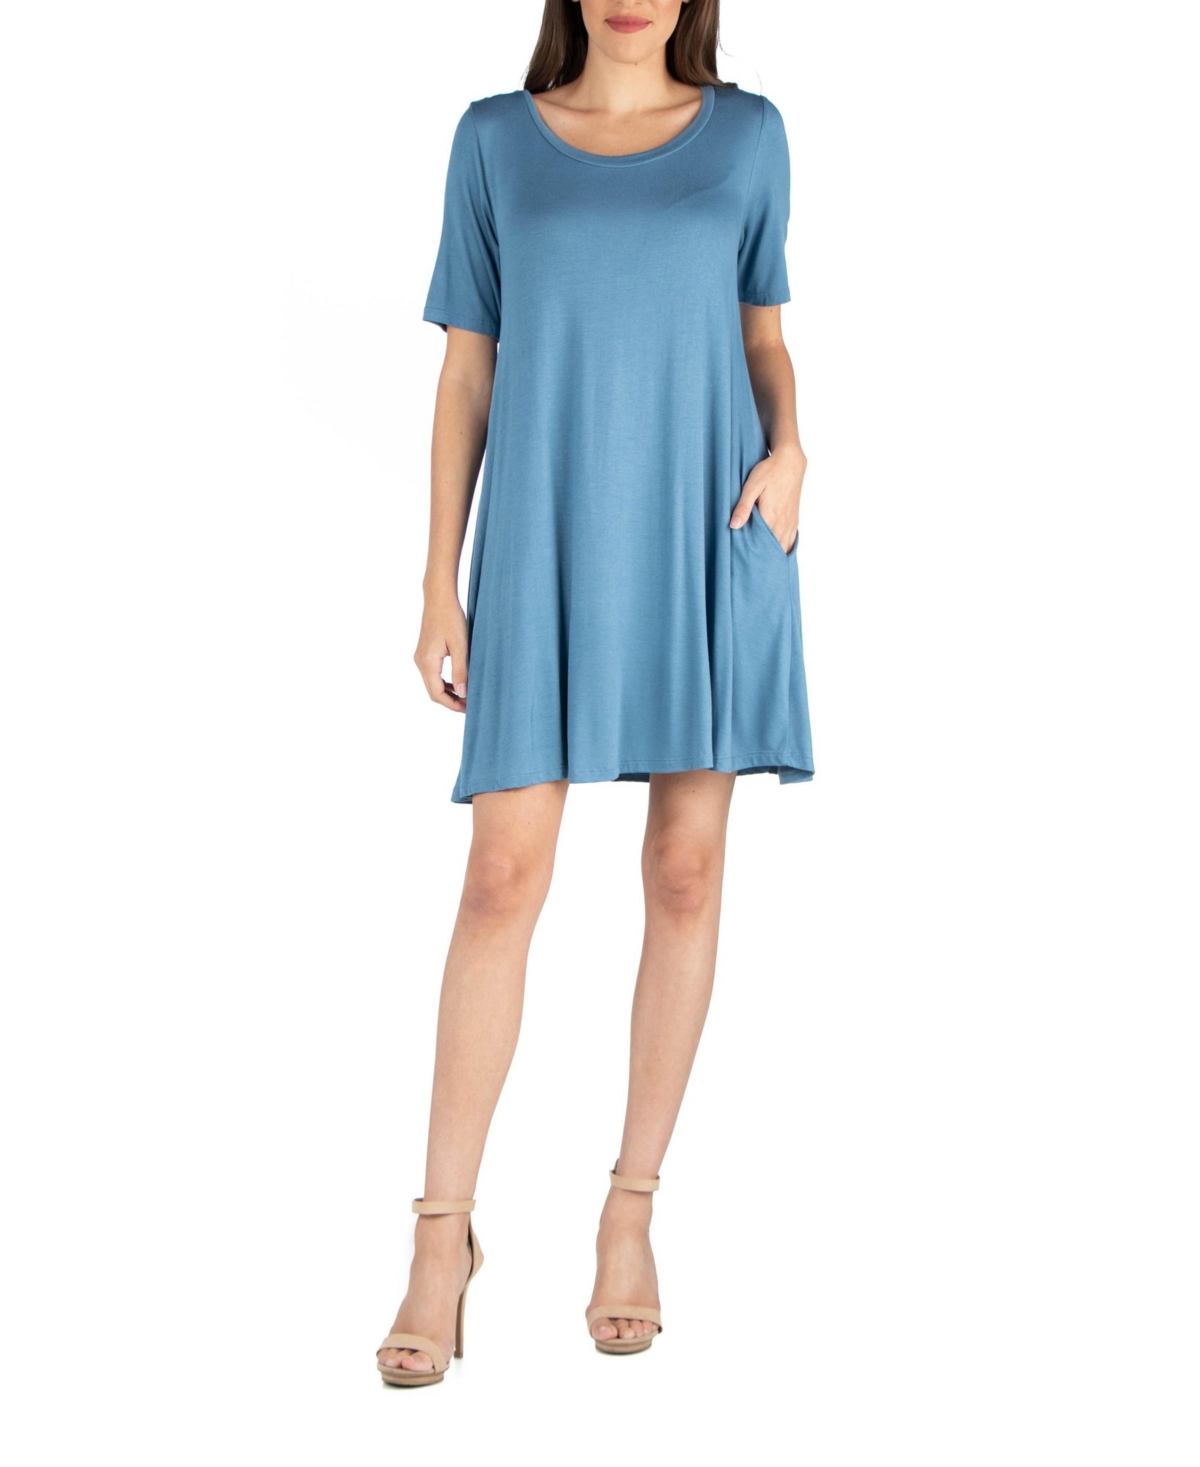 Women's Soft Flare T-shirt Dress with Pocket Detail - Blue